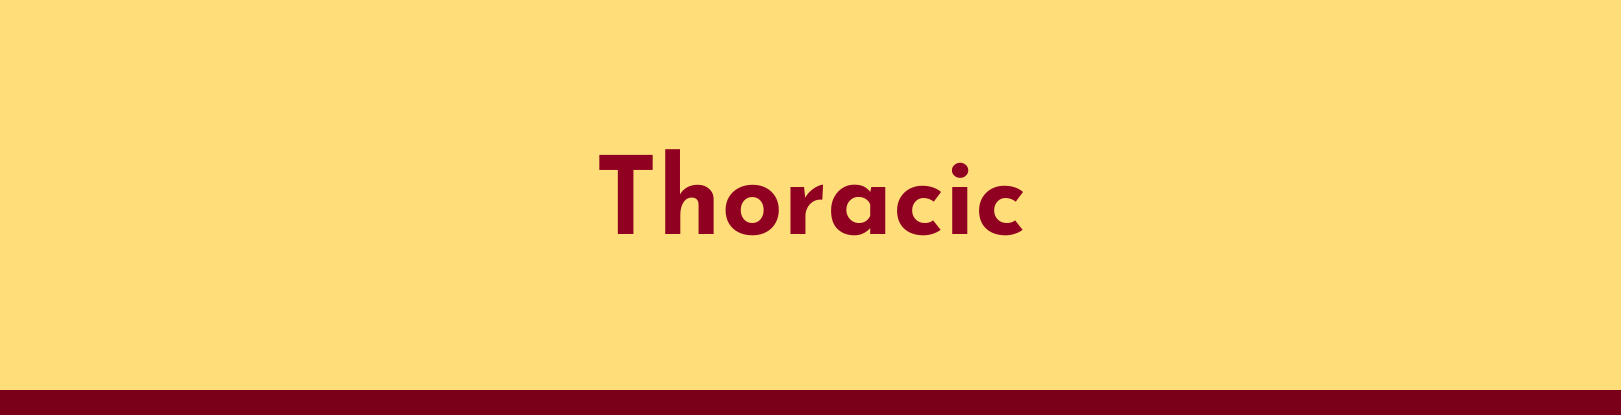 Thoracic